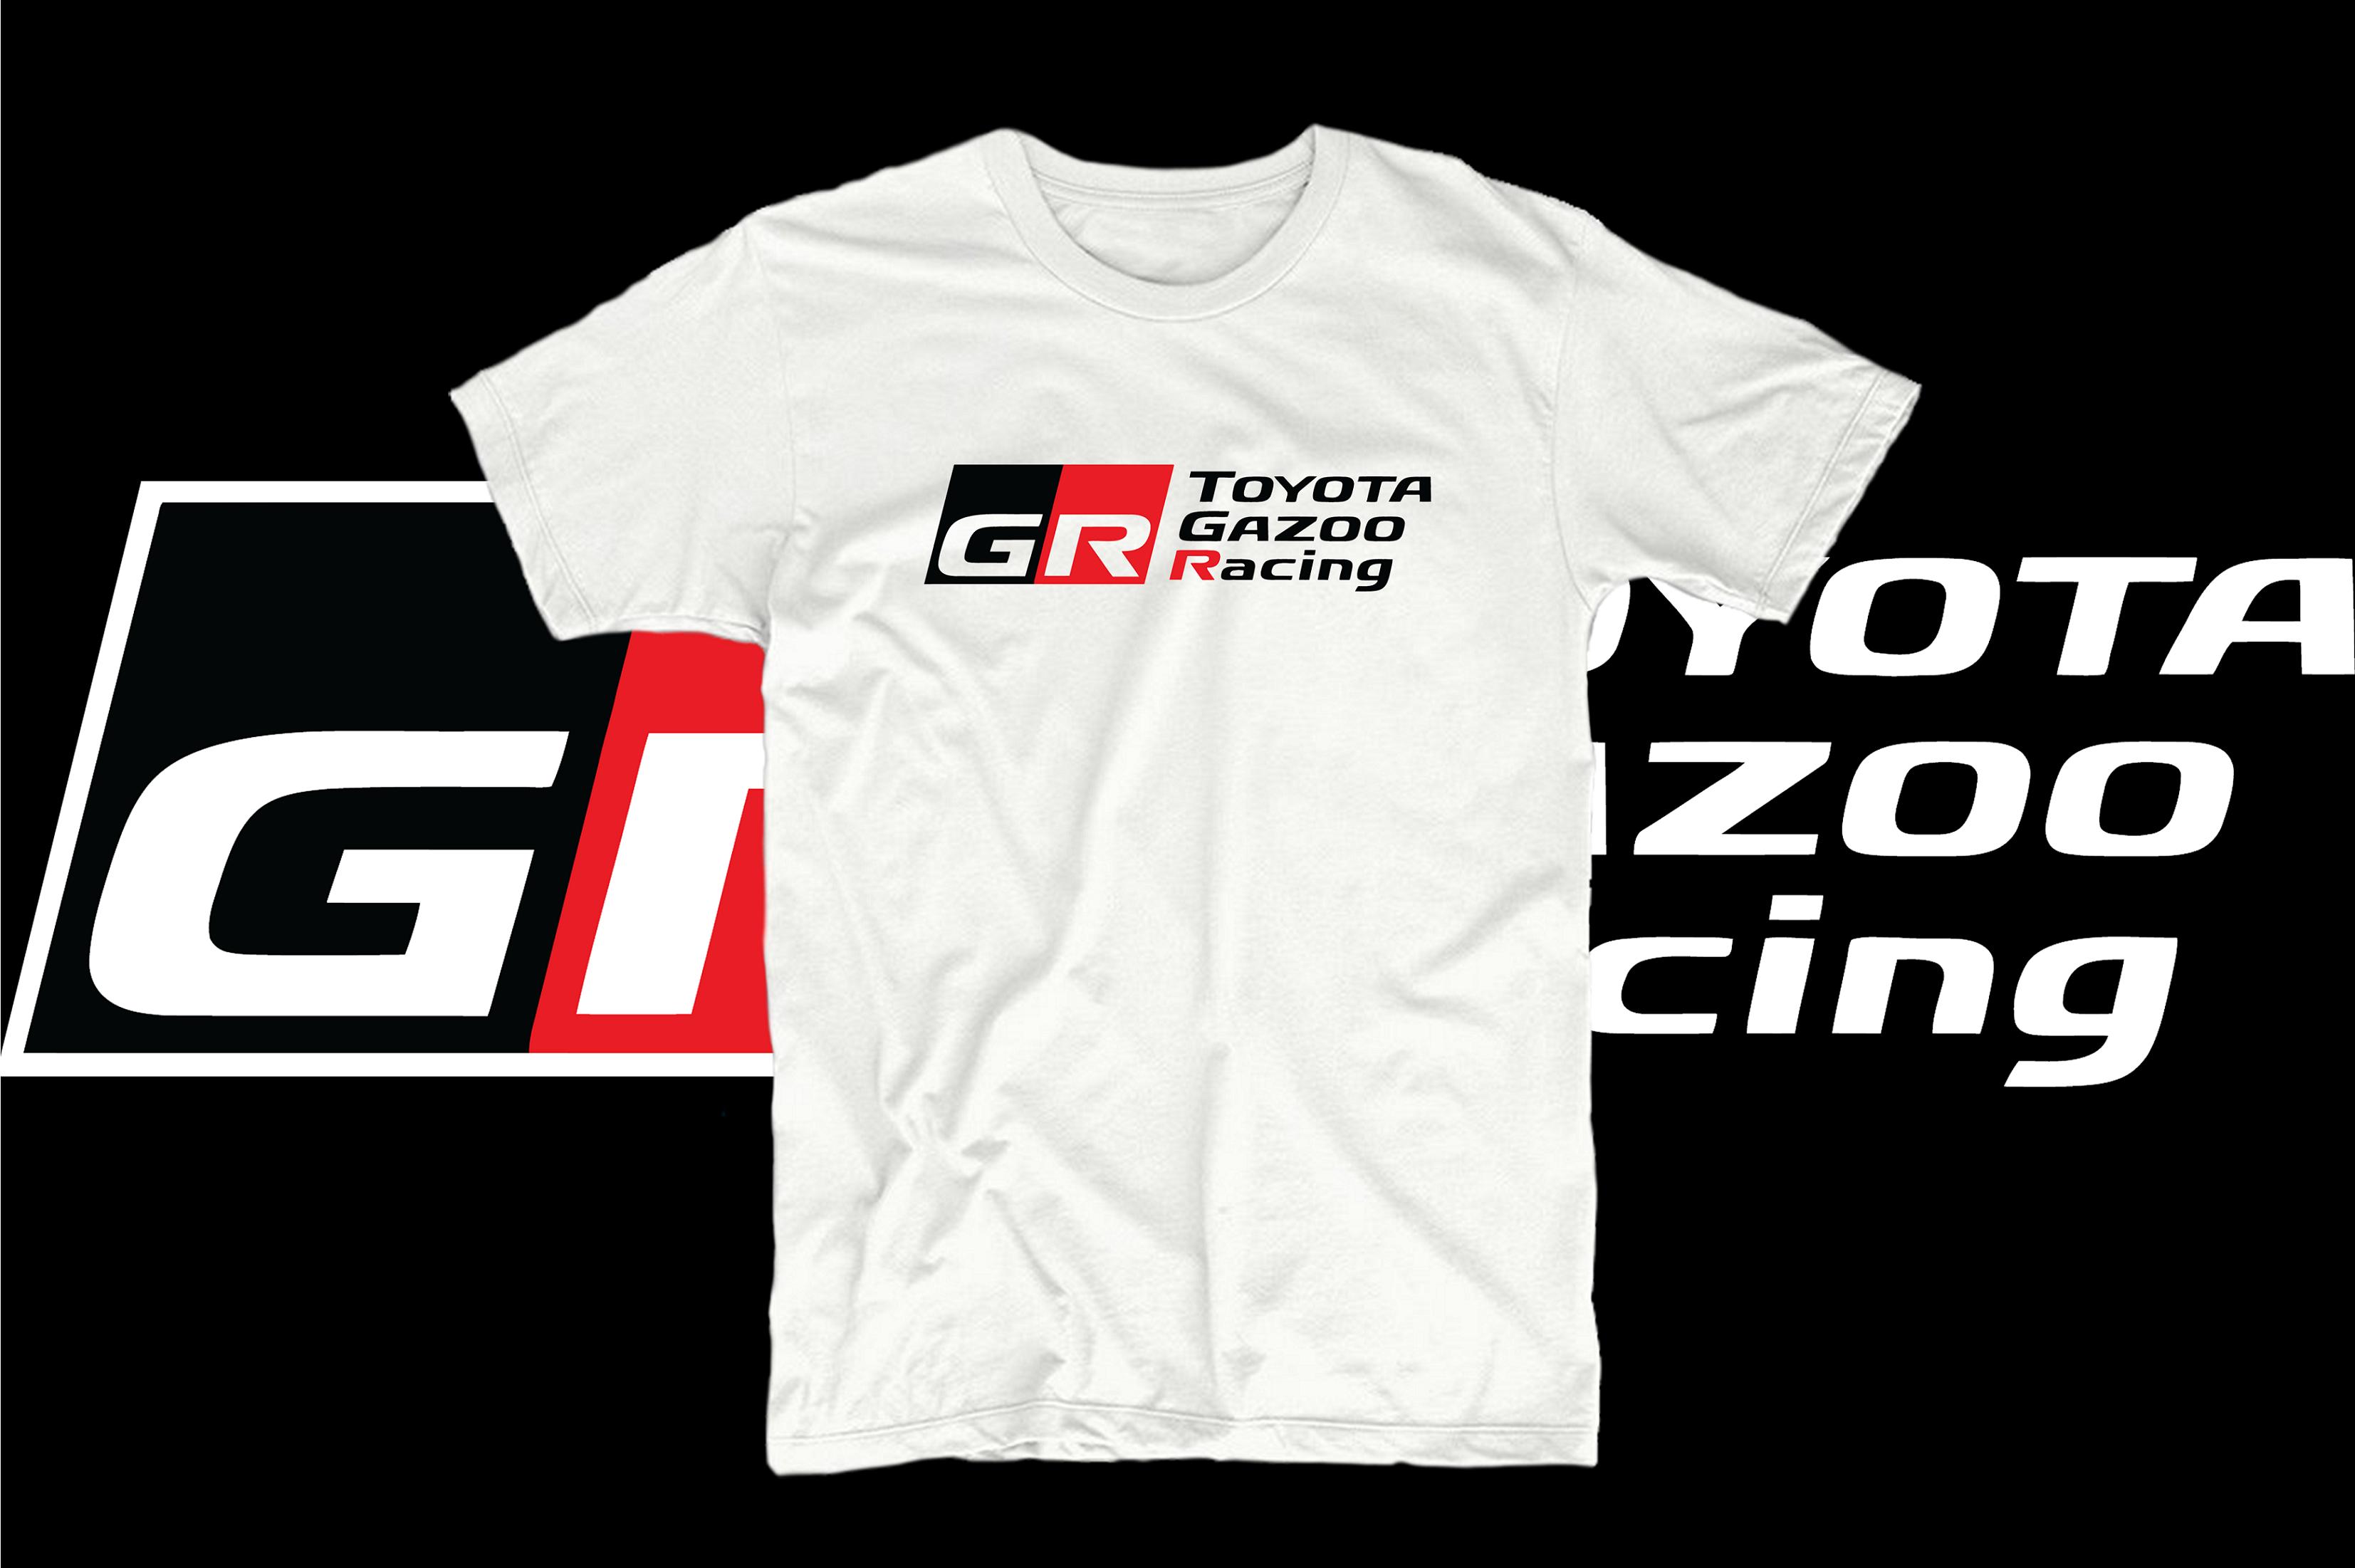 Men S Clothing Toyota Gazoo Racing Classic White Mens T Shirt Clothing Shoes Accessories Quiebre Cl